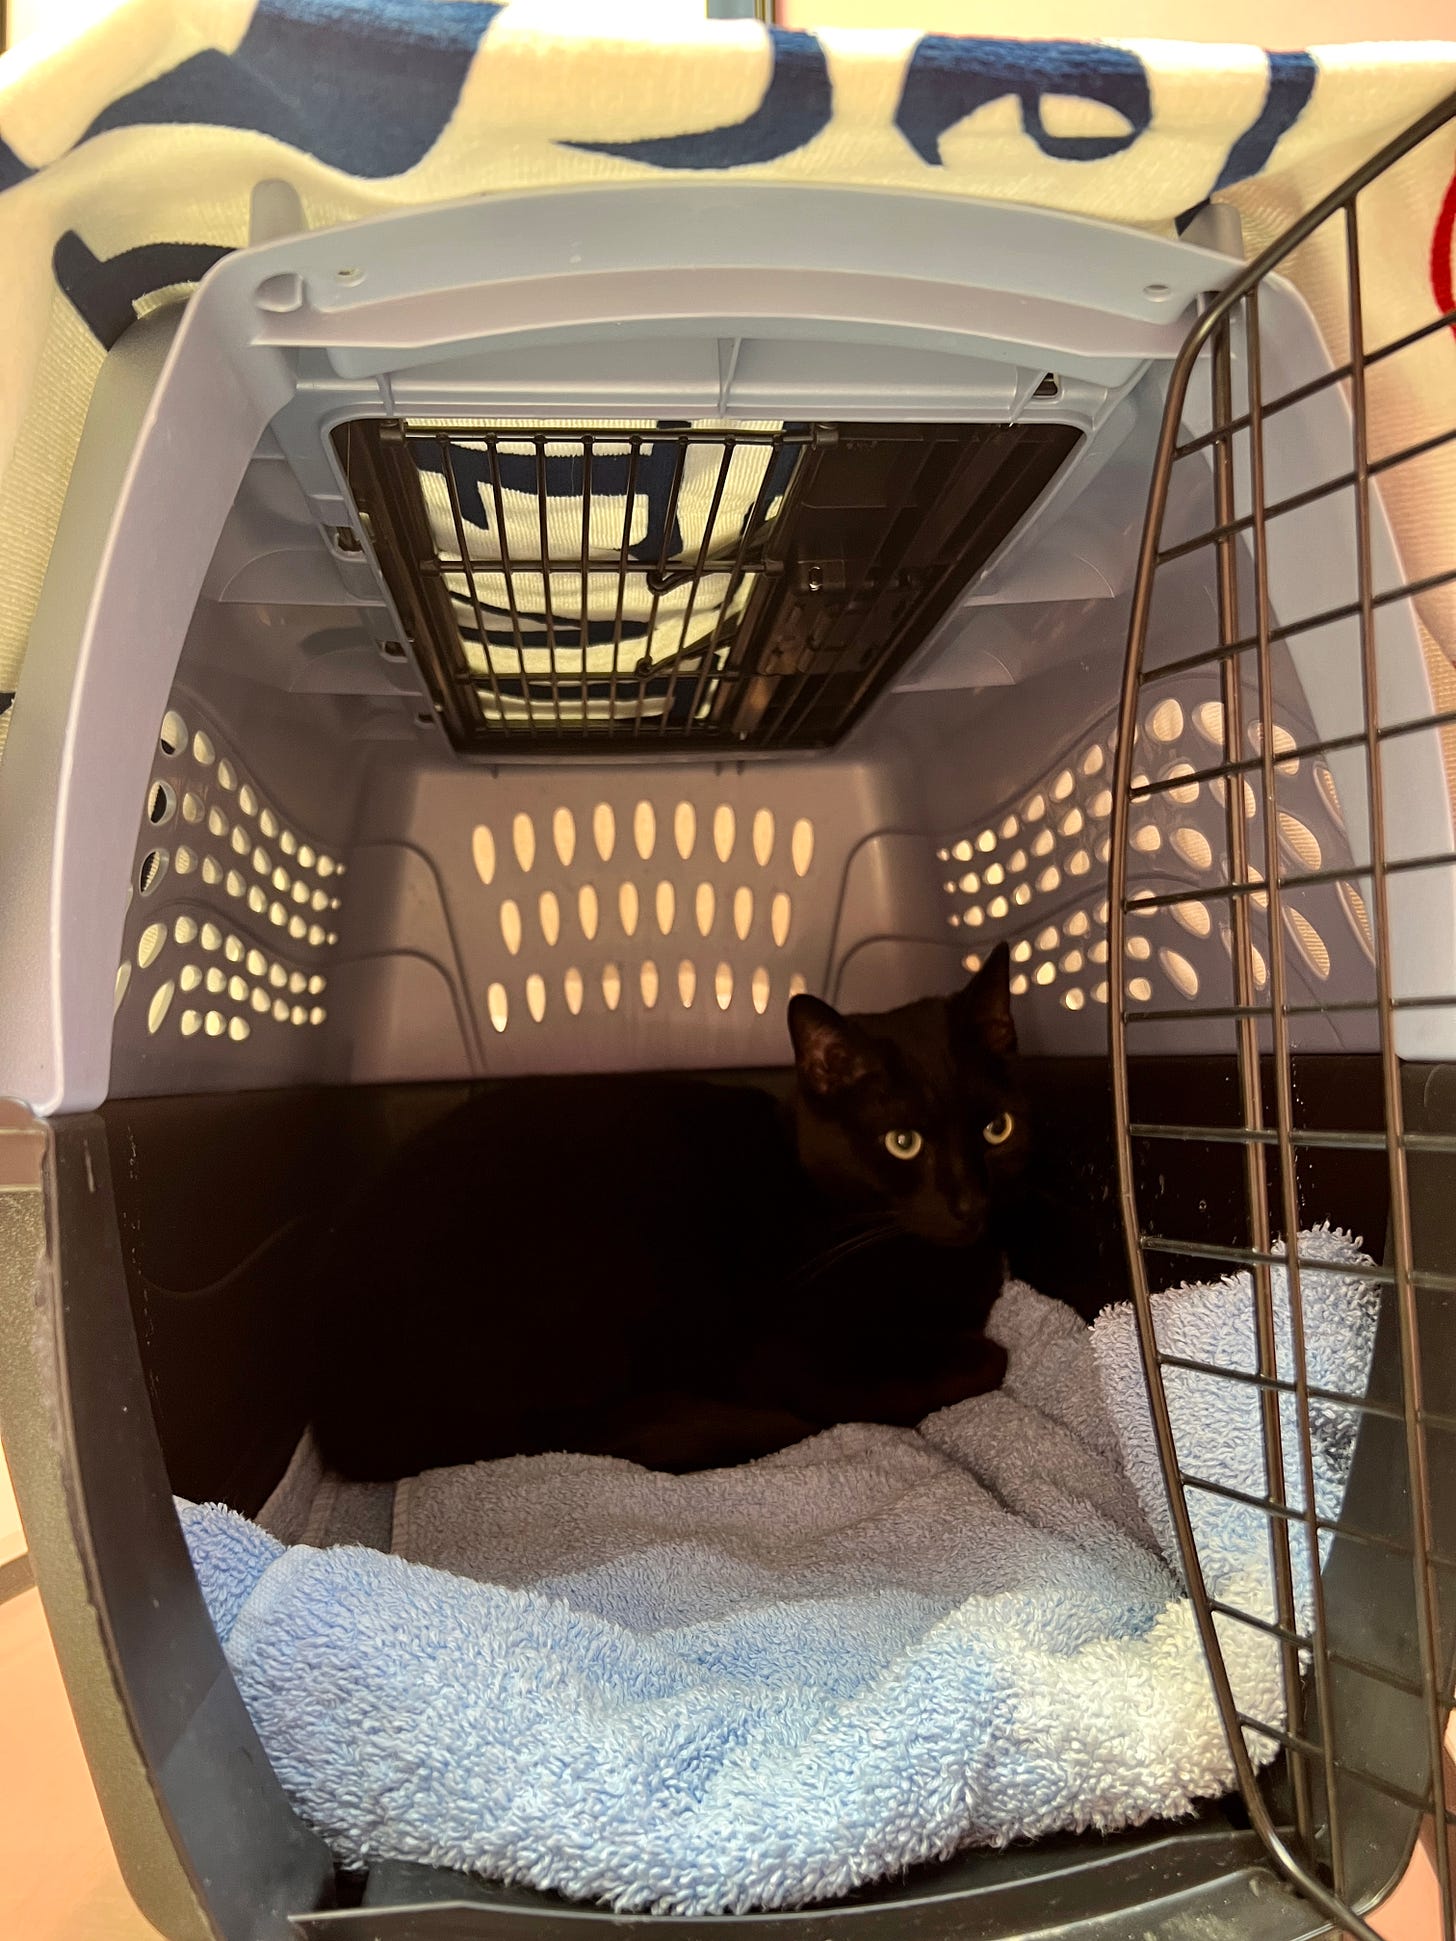 Black cat in carrier.